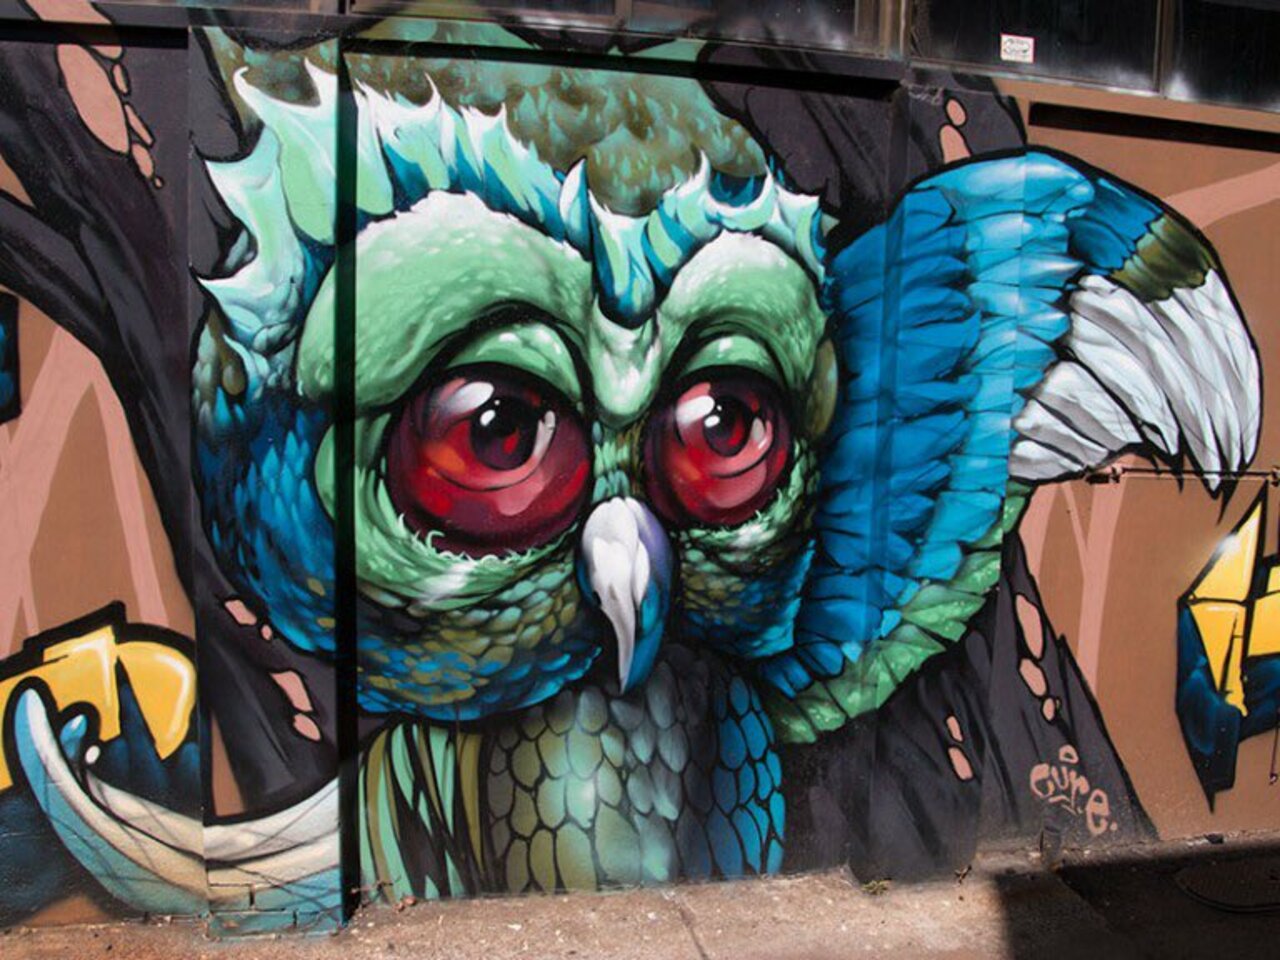 #Mural by Meks & Reals #Toowoomba #Australia #Streetart #urbanart #graffiti #art https://t.co/rWHp5BgIHl